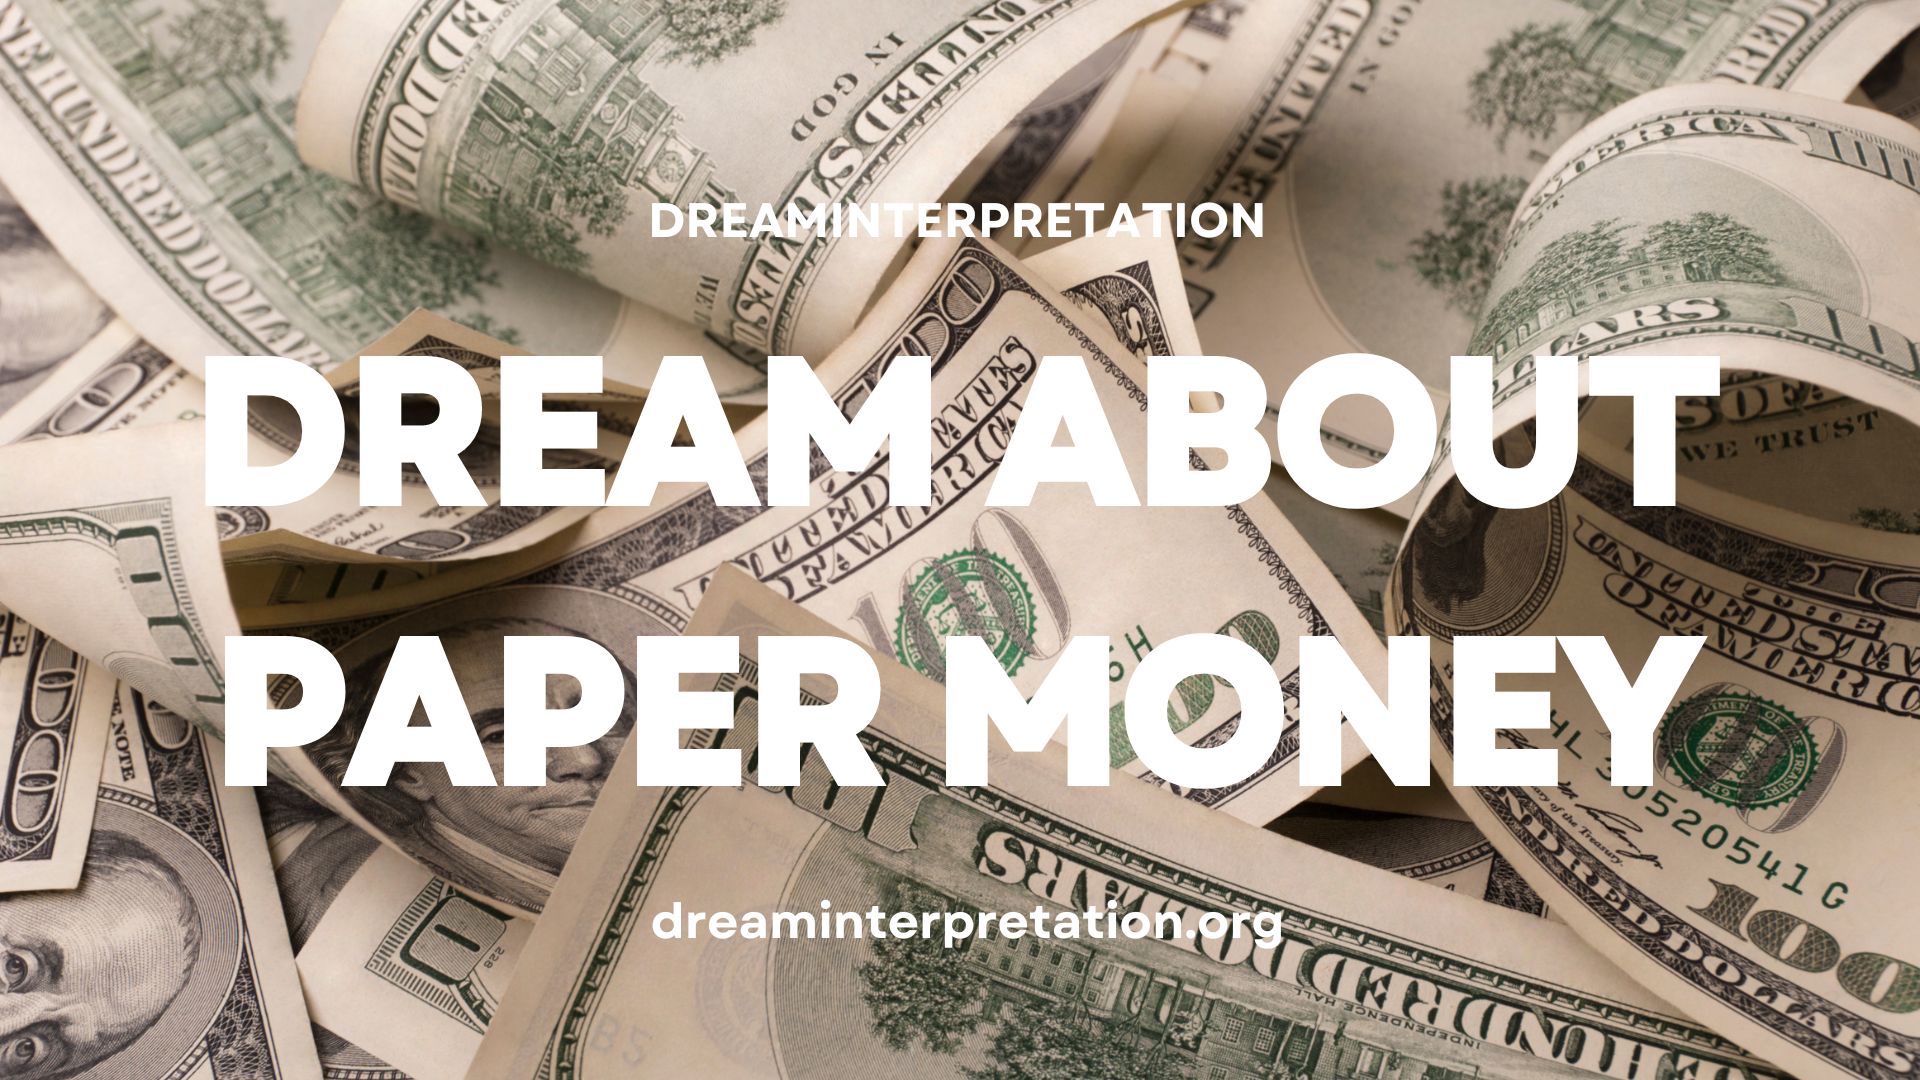 Dream About Paper Money